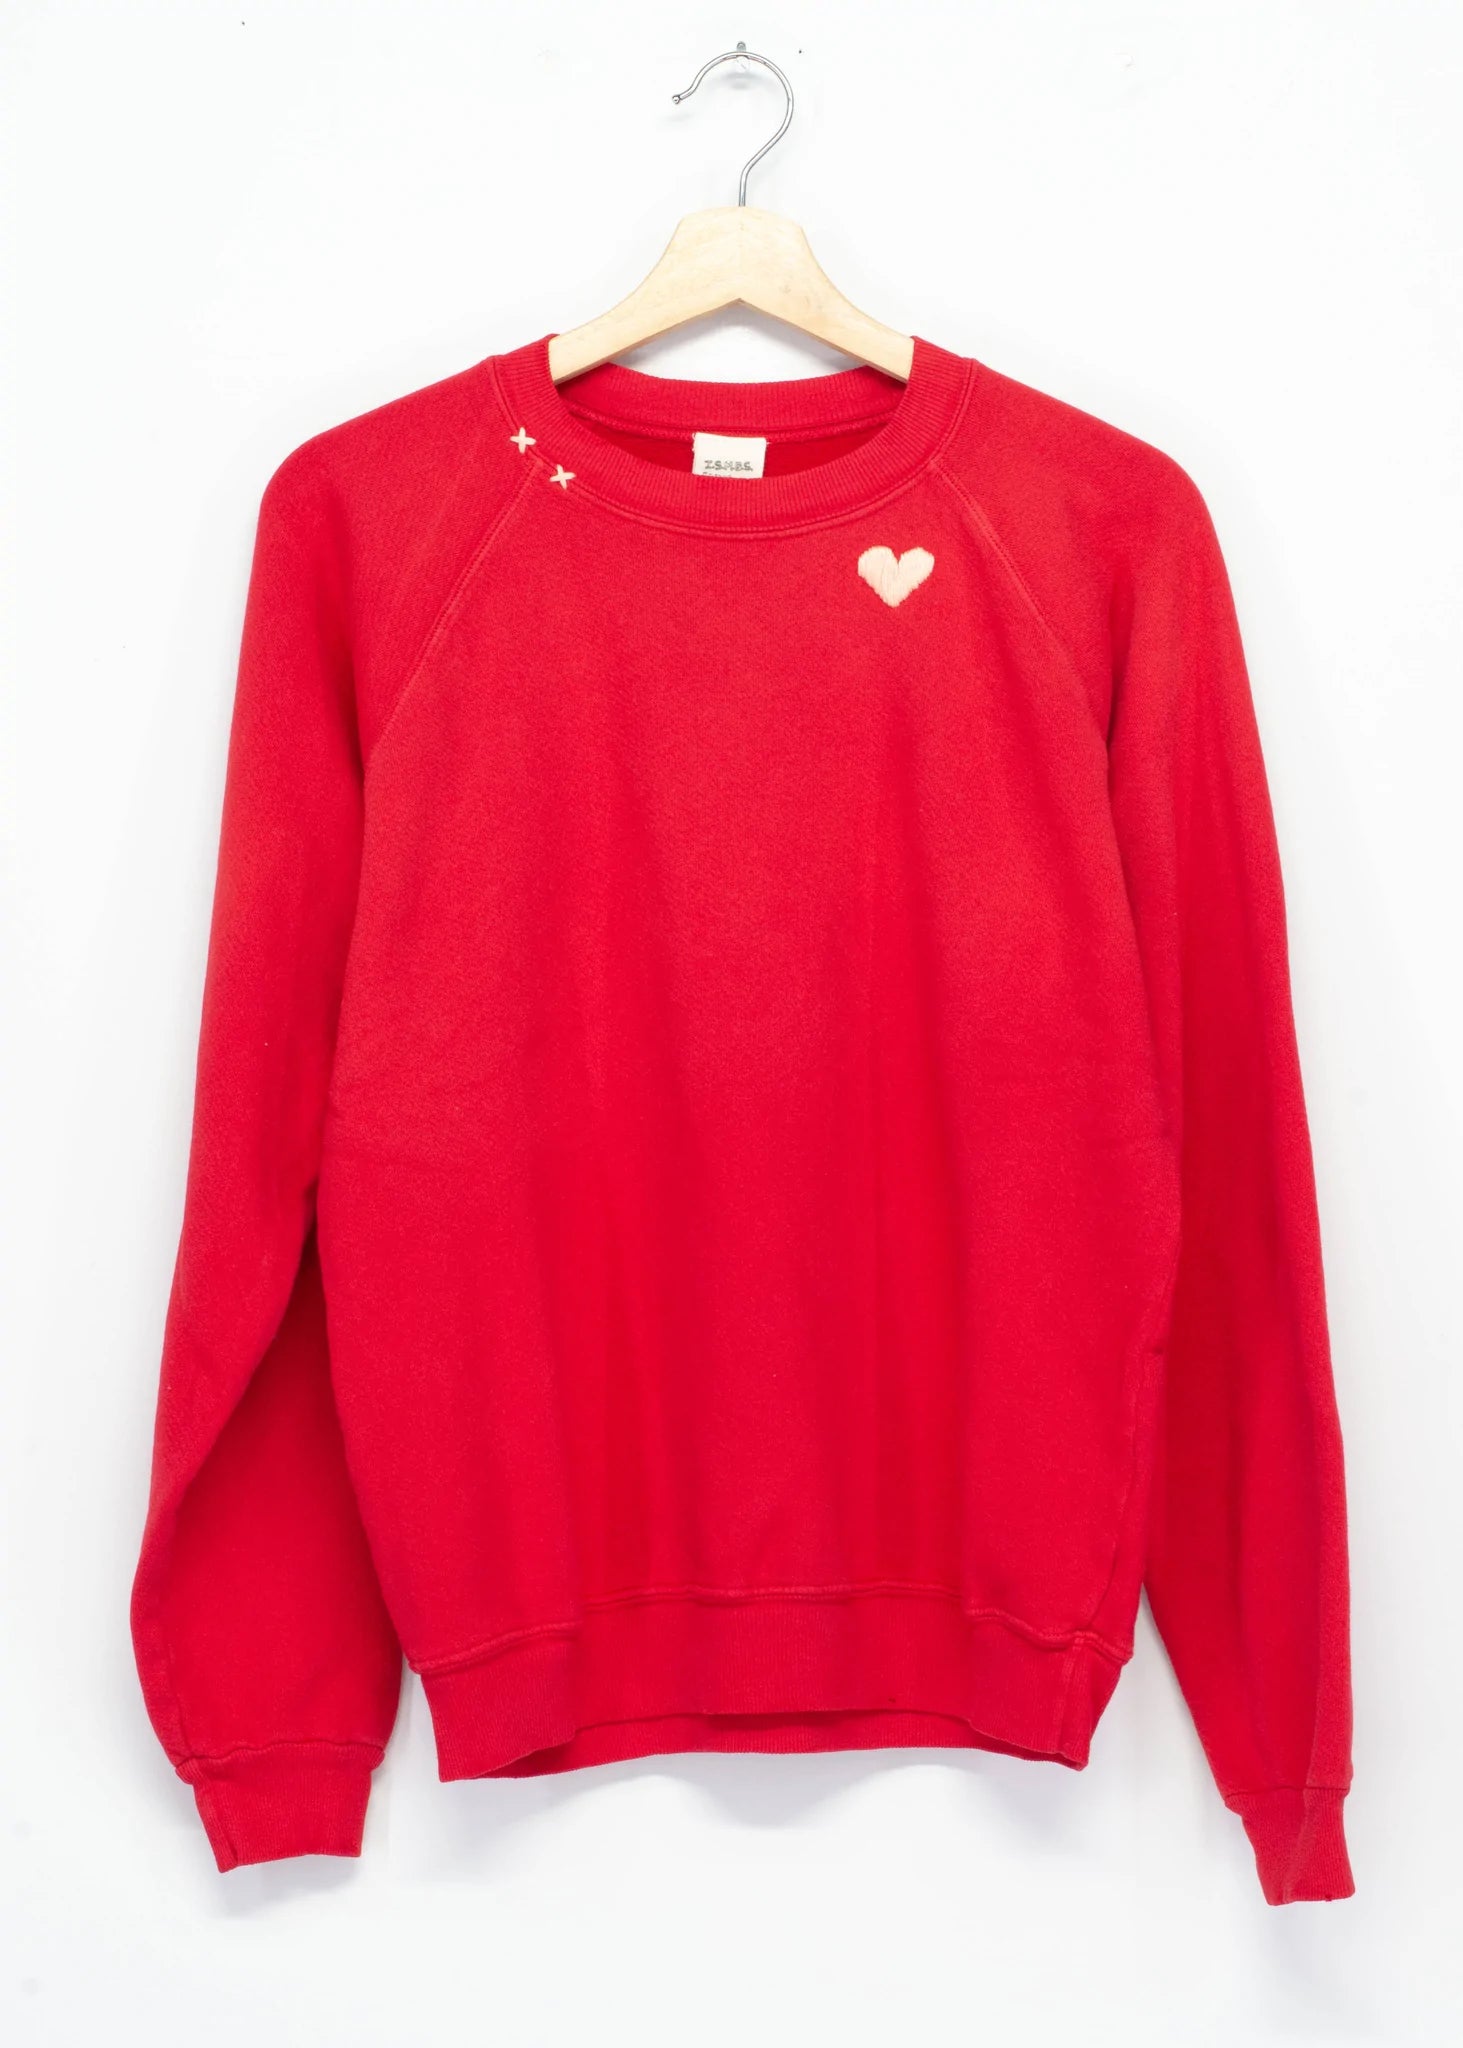 I Stole My Boyfriend's Shirt - Heart Sweatshirt - Council Studio